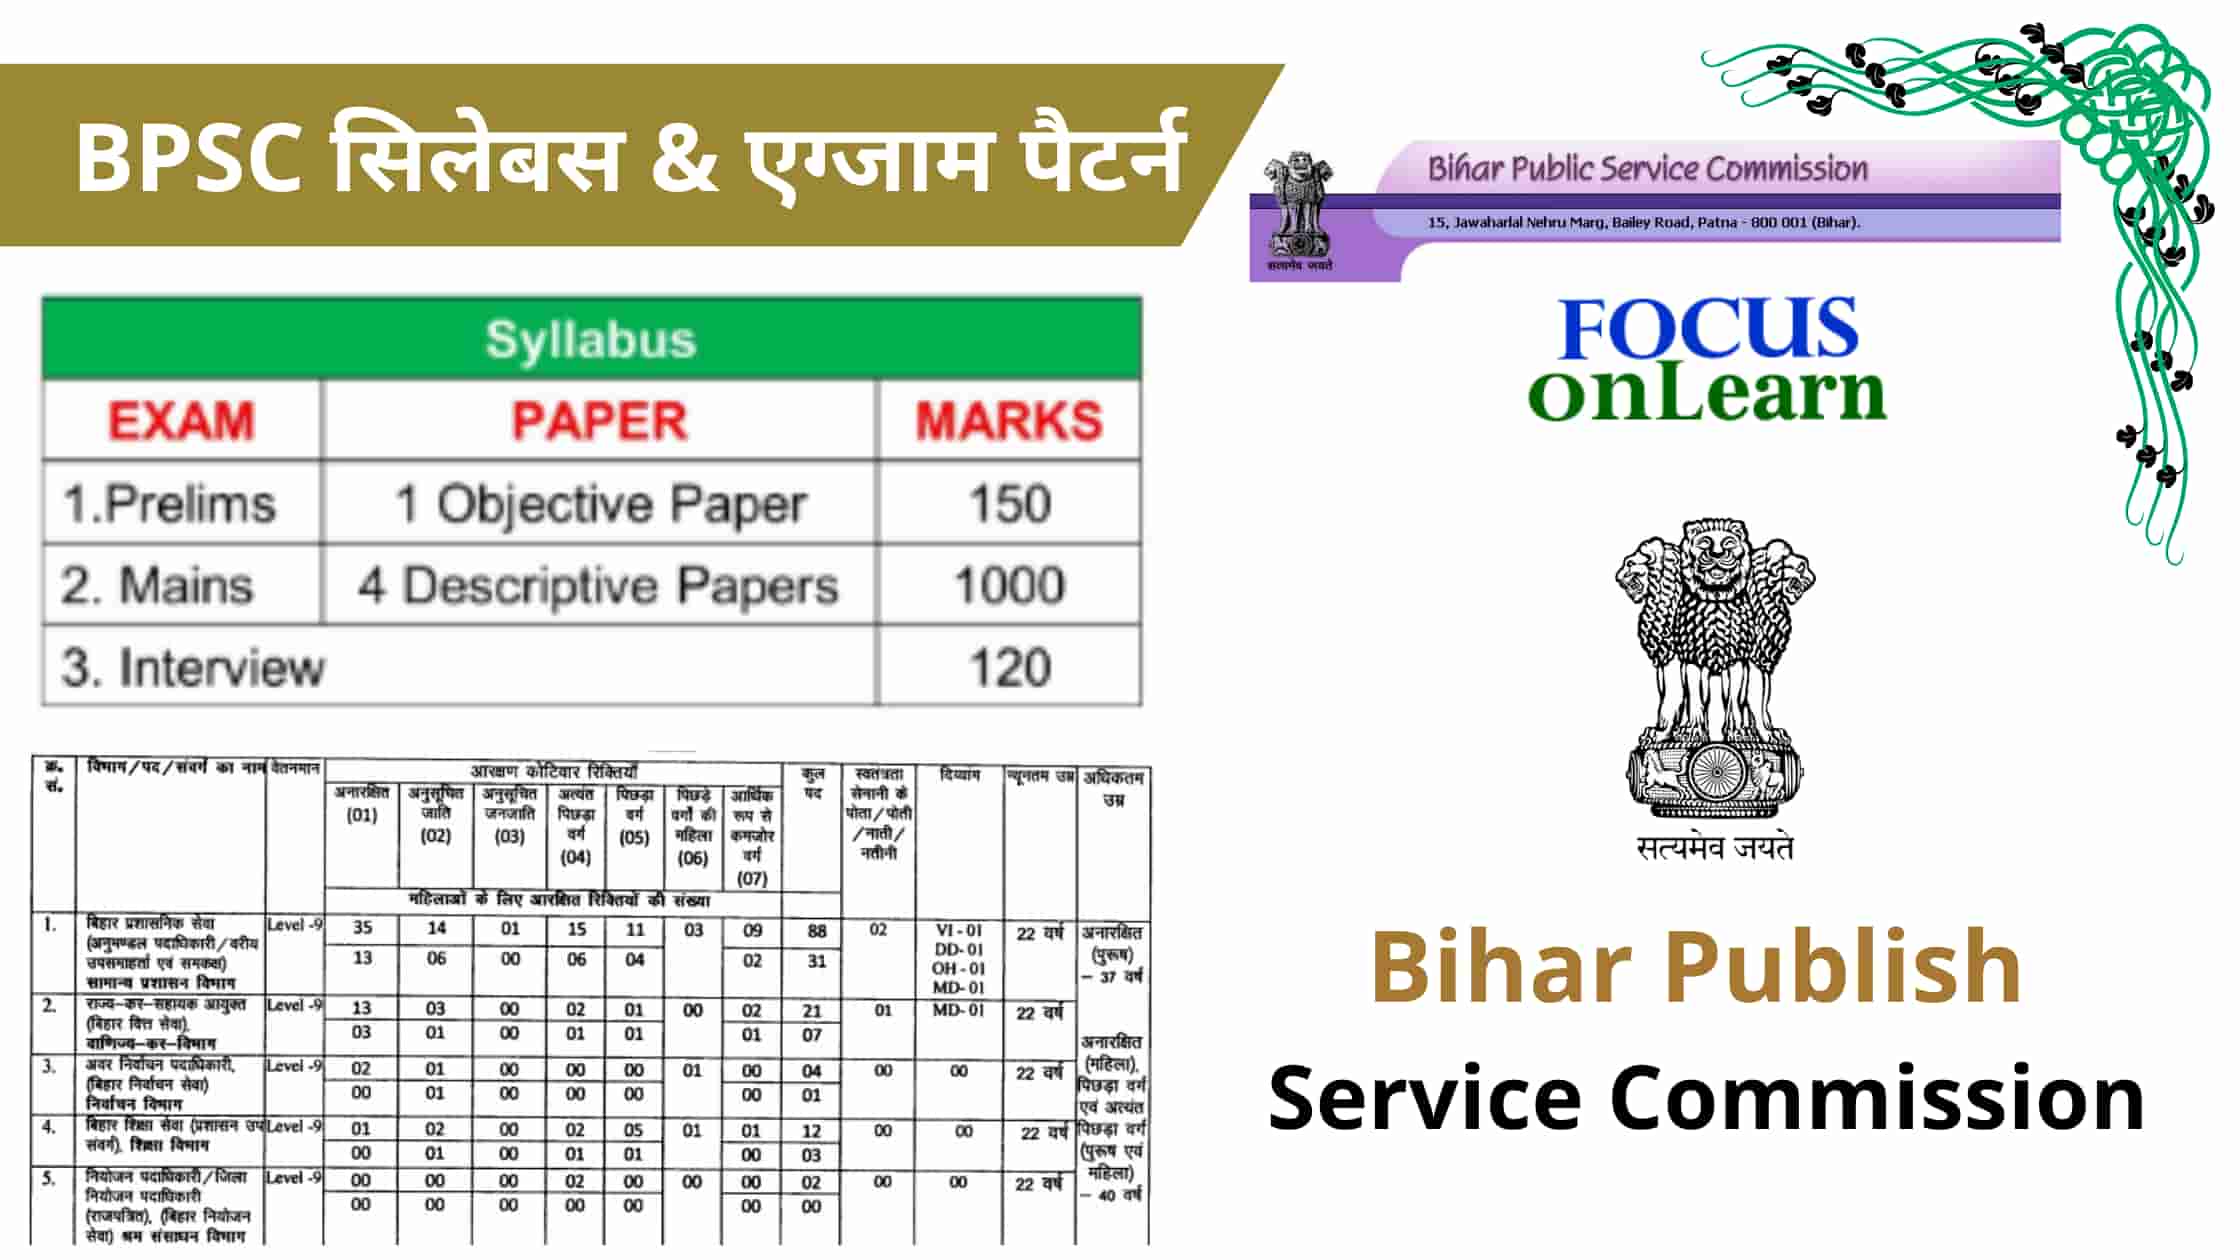 BPSC Syllabus in Hindi